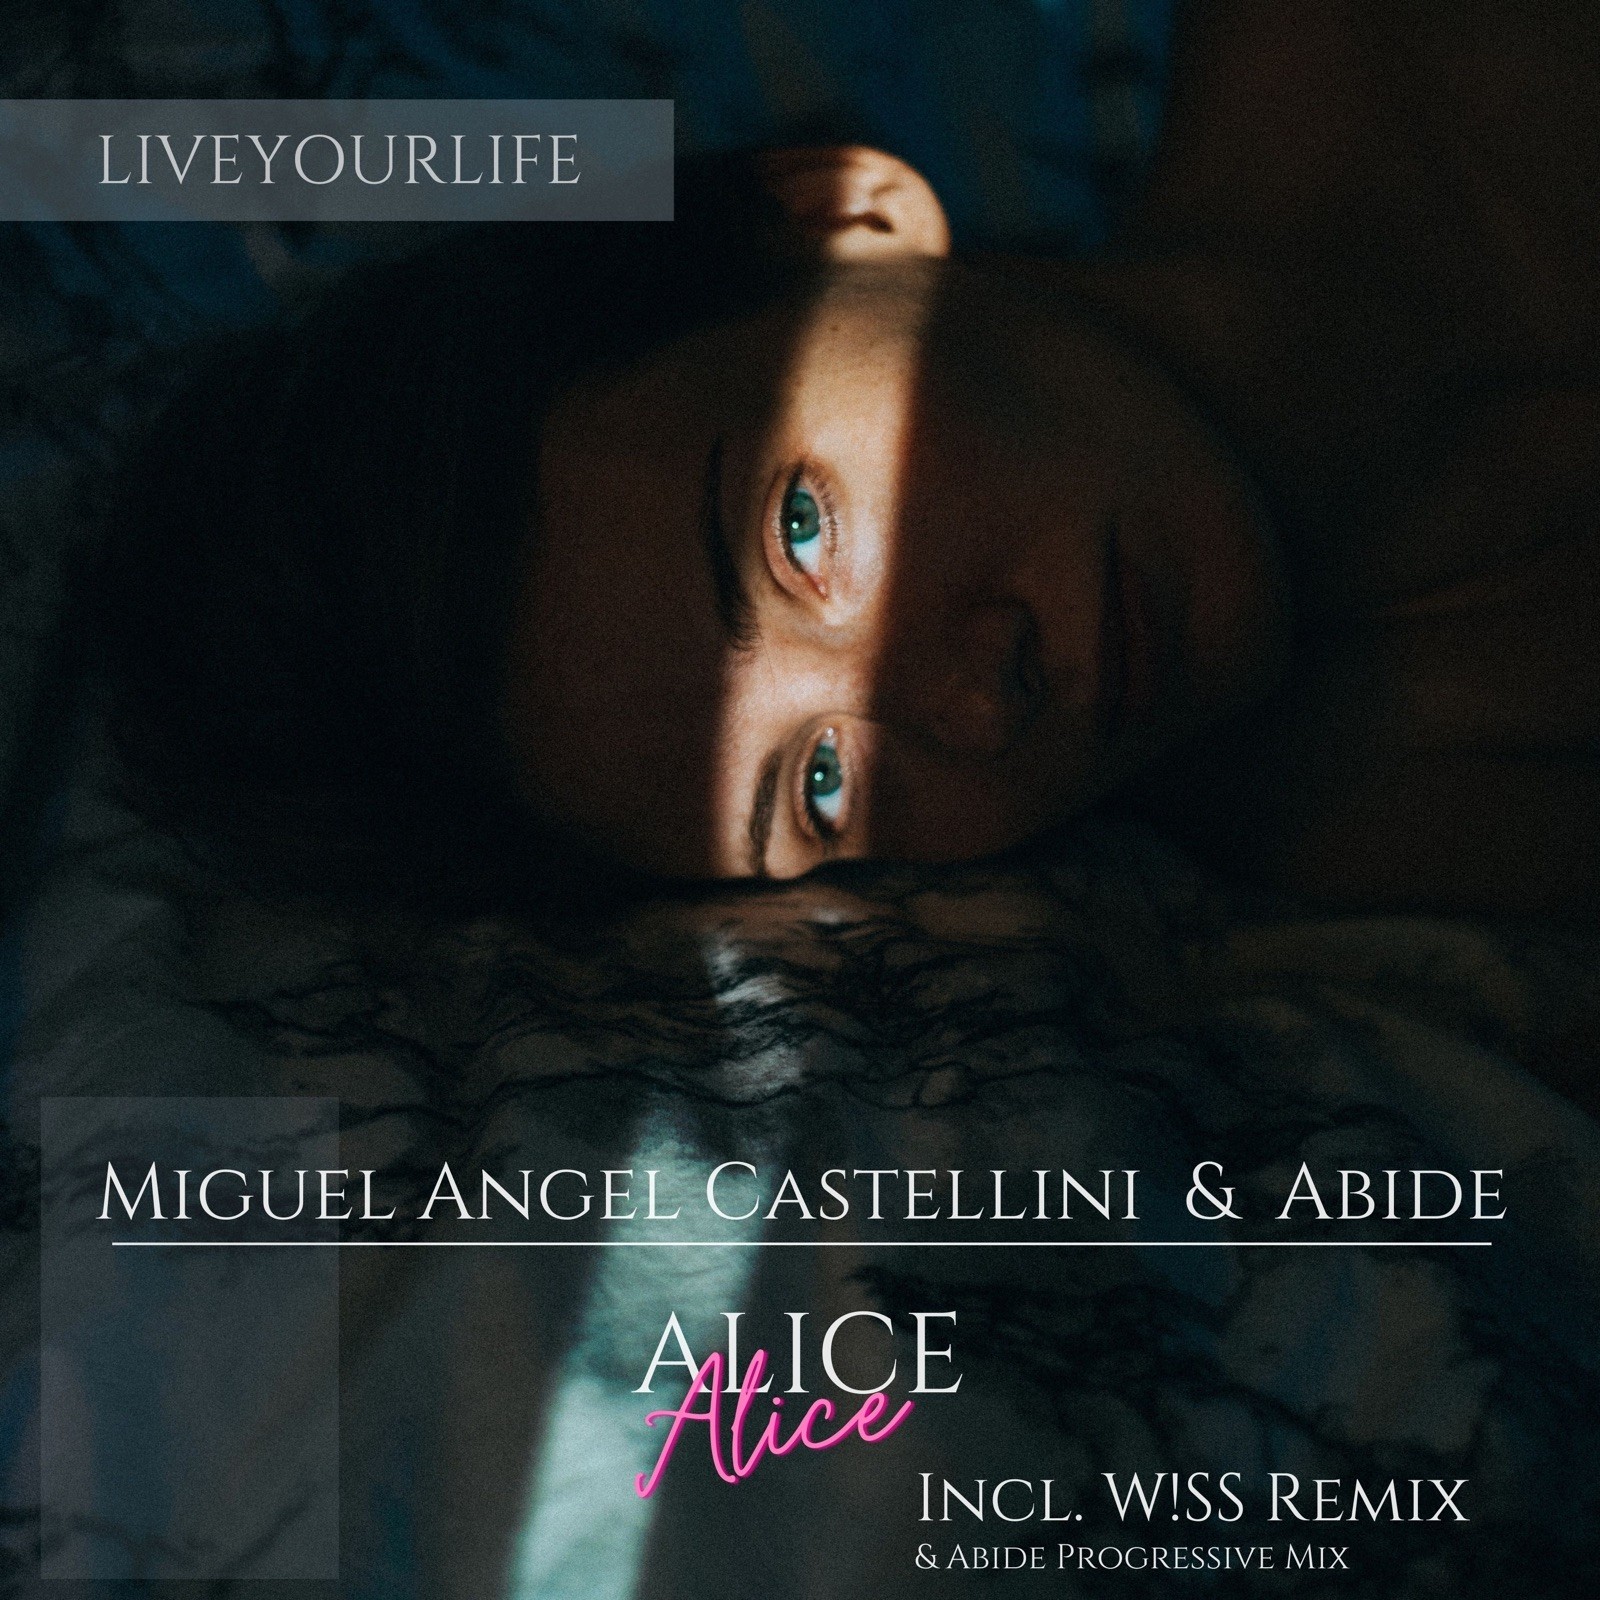 Miguel Angel Castellini & Abide - Alice / Incl. W!SS Remix & Abide Progressive Mix